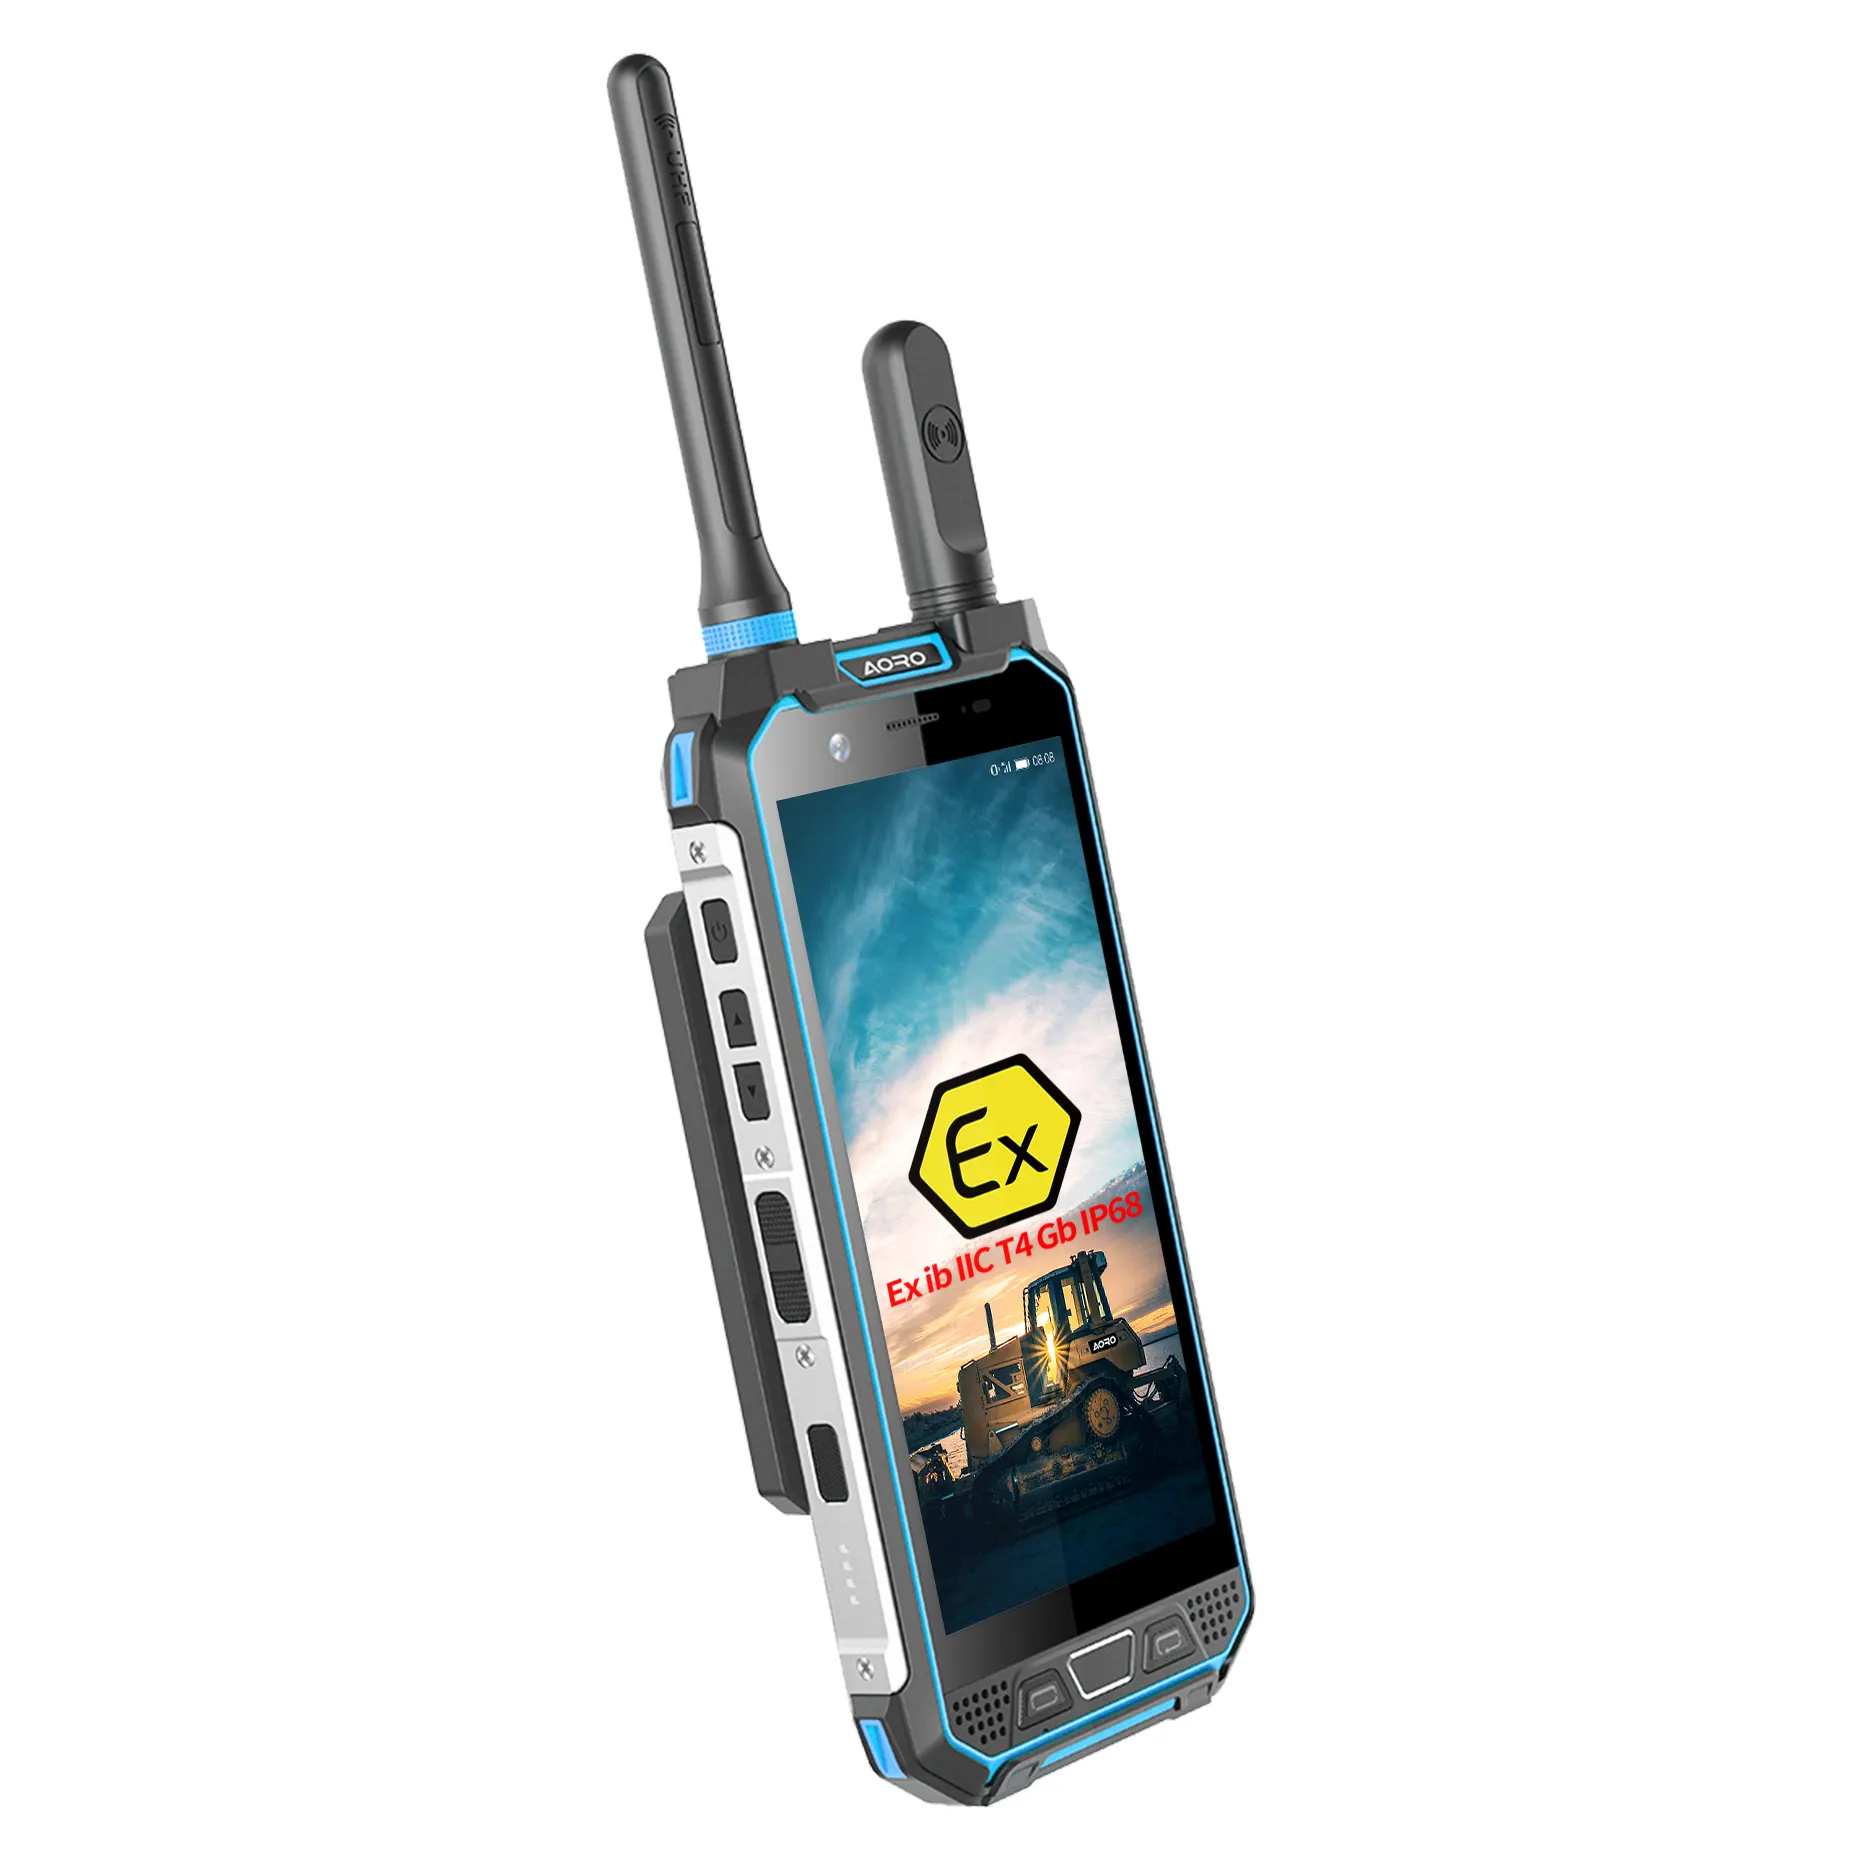 LTE 400M 600M 1.4G 1.8G POC GSM Atex IP6 UHF radio analog talk walki phone with 915MHz rfid reader walkie talkie ATEX phone